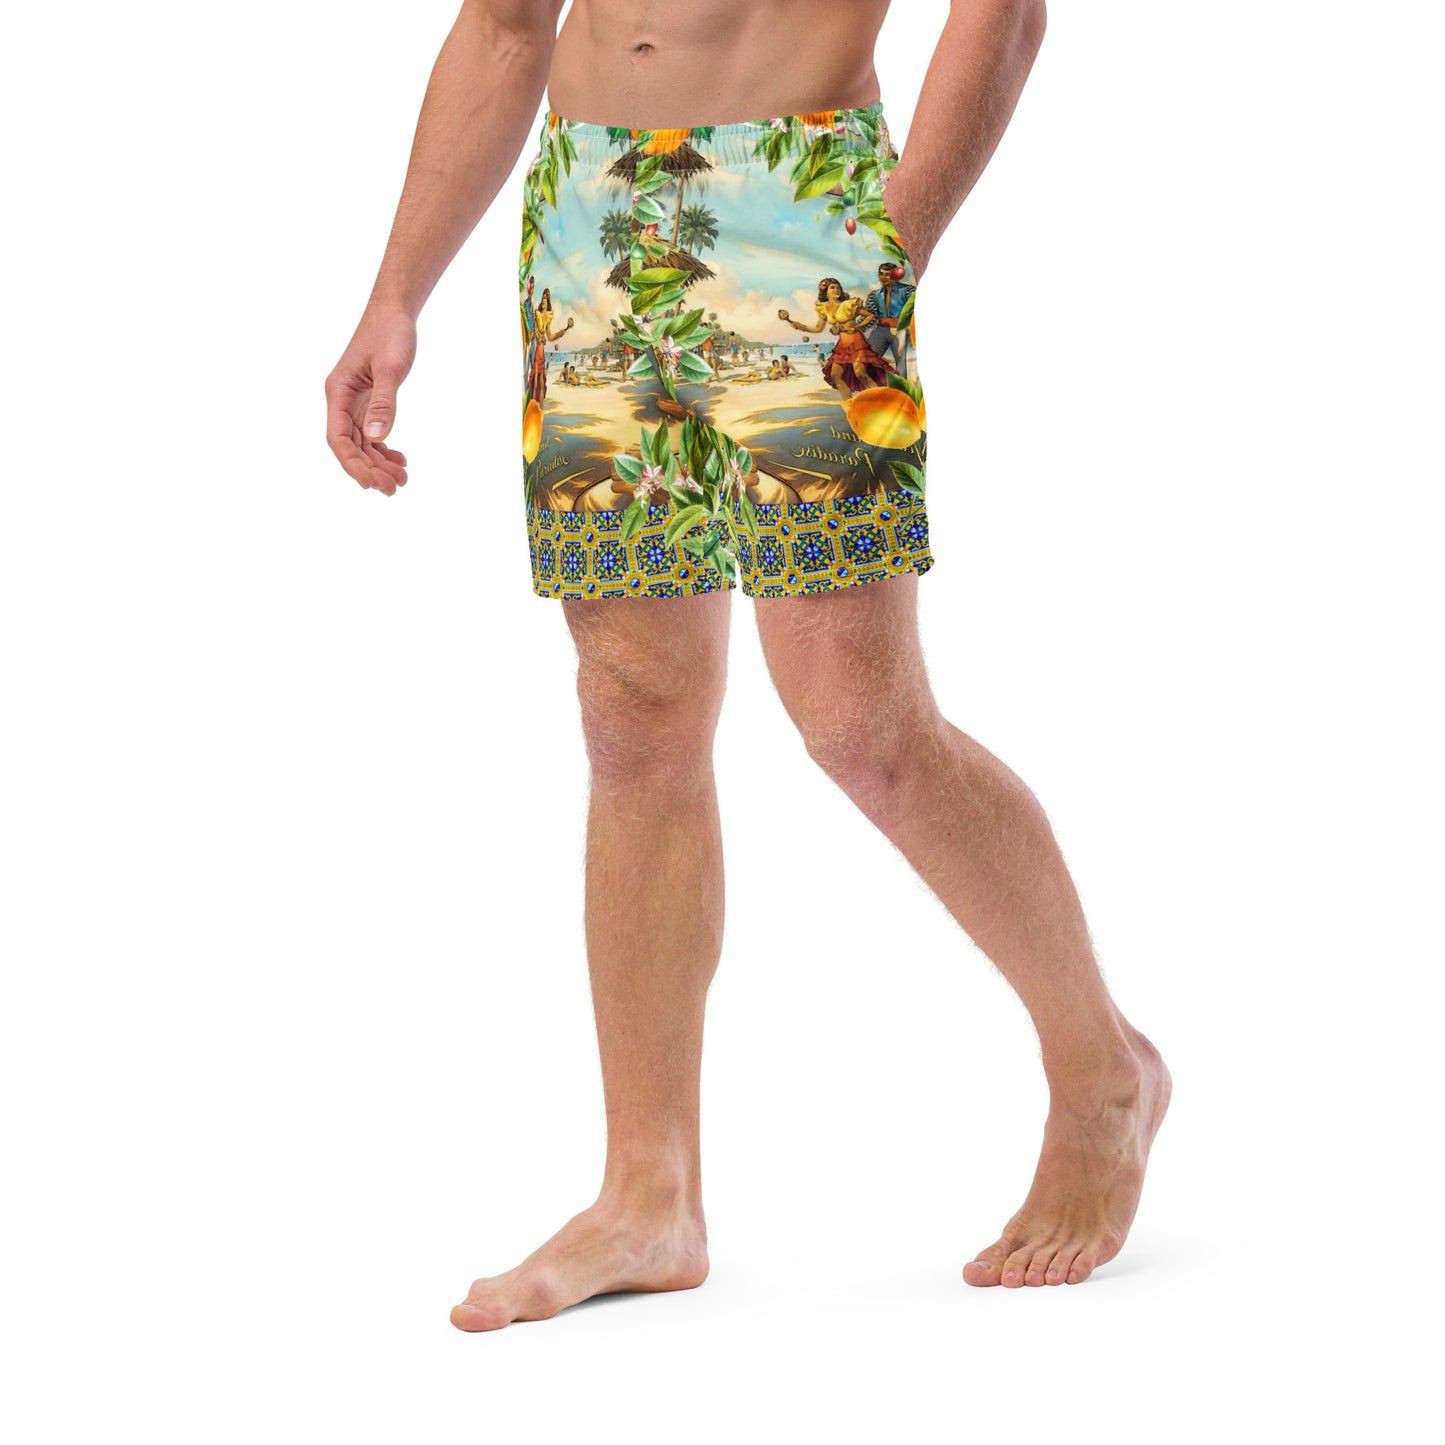 Men's Varadero swim trunks